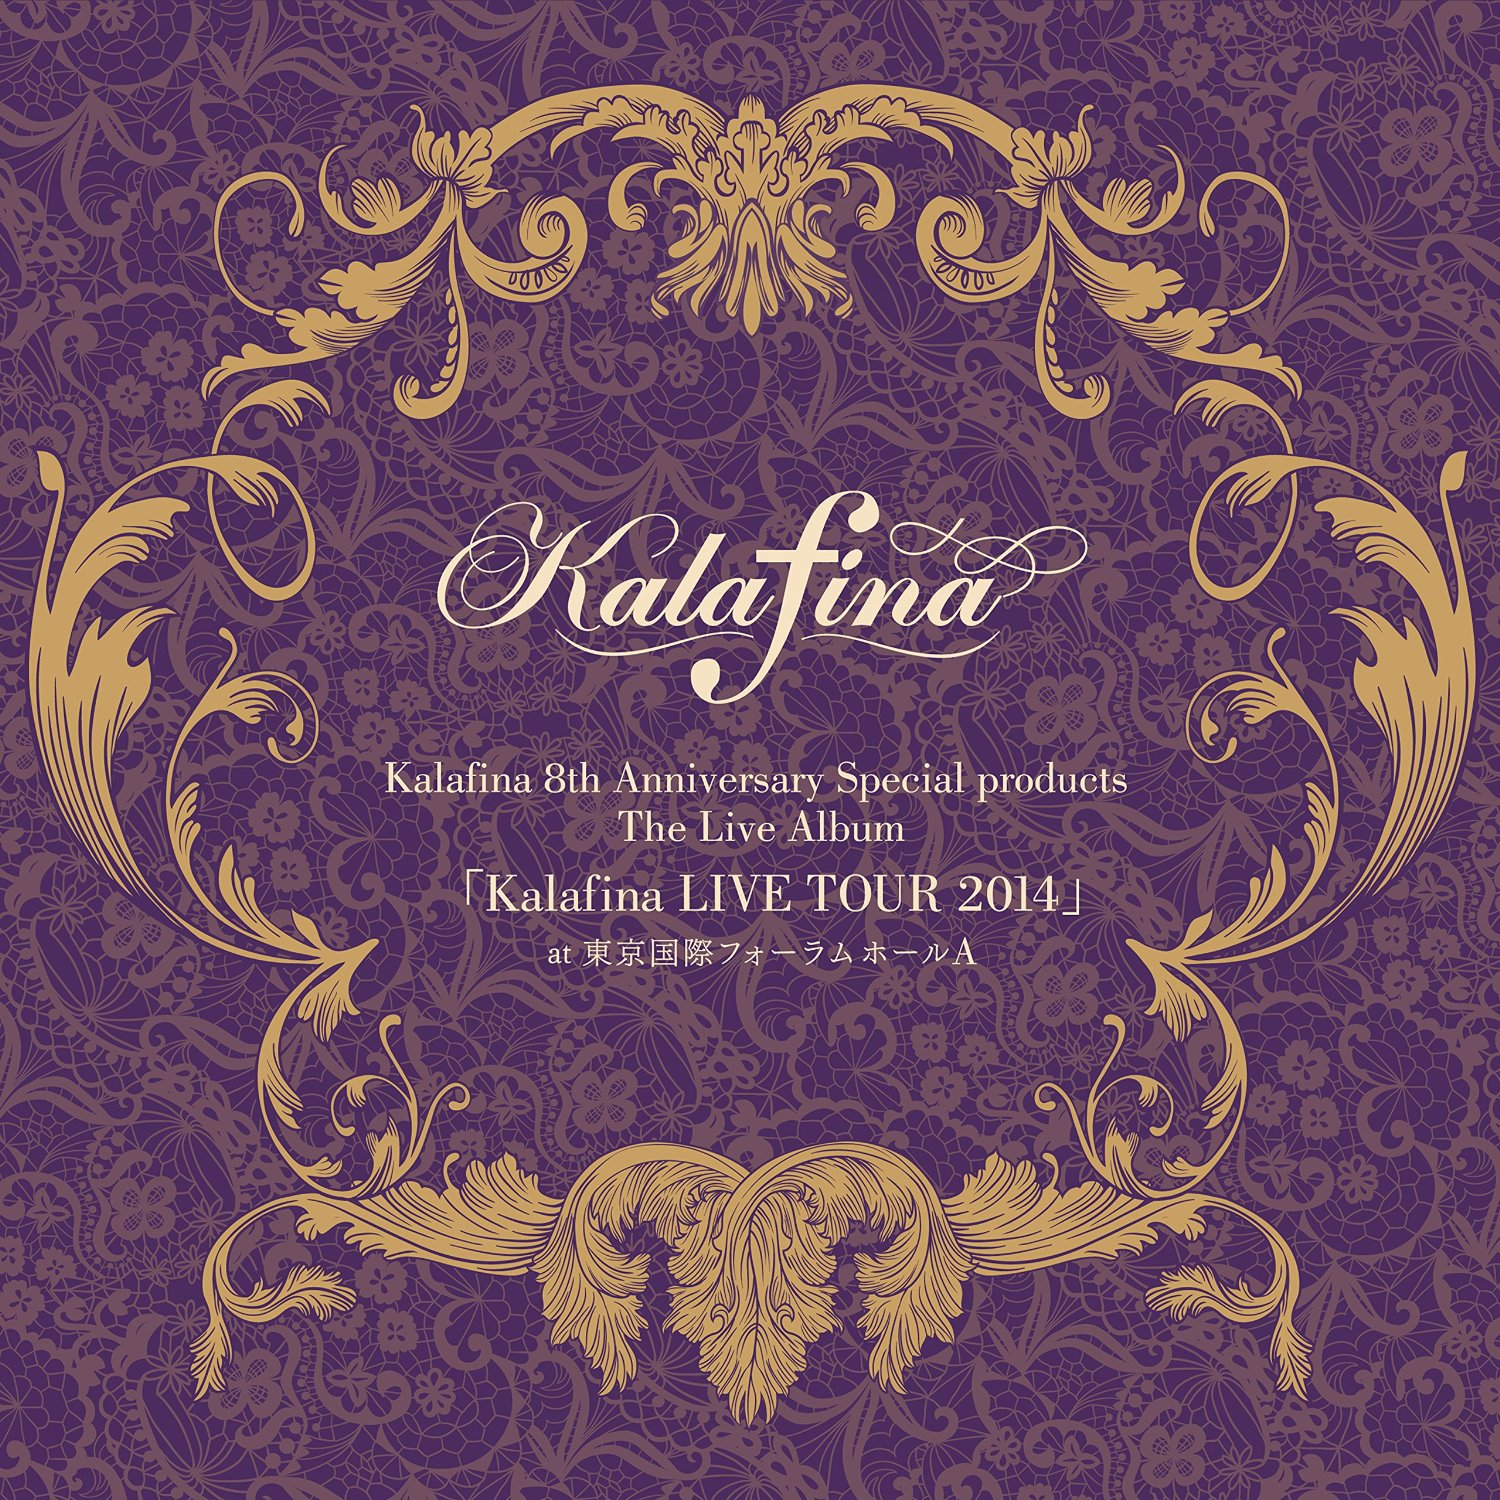 Kalafina - Kalafina 8th Anniversary Special products The Live Album「Kalafina LIVE TOUR 2014」at 東京国際フォーラム ホールA [Mora FLAC 24bit/96kHz]